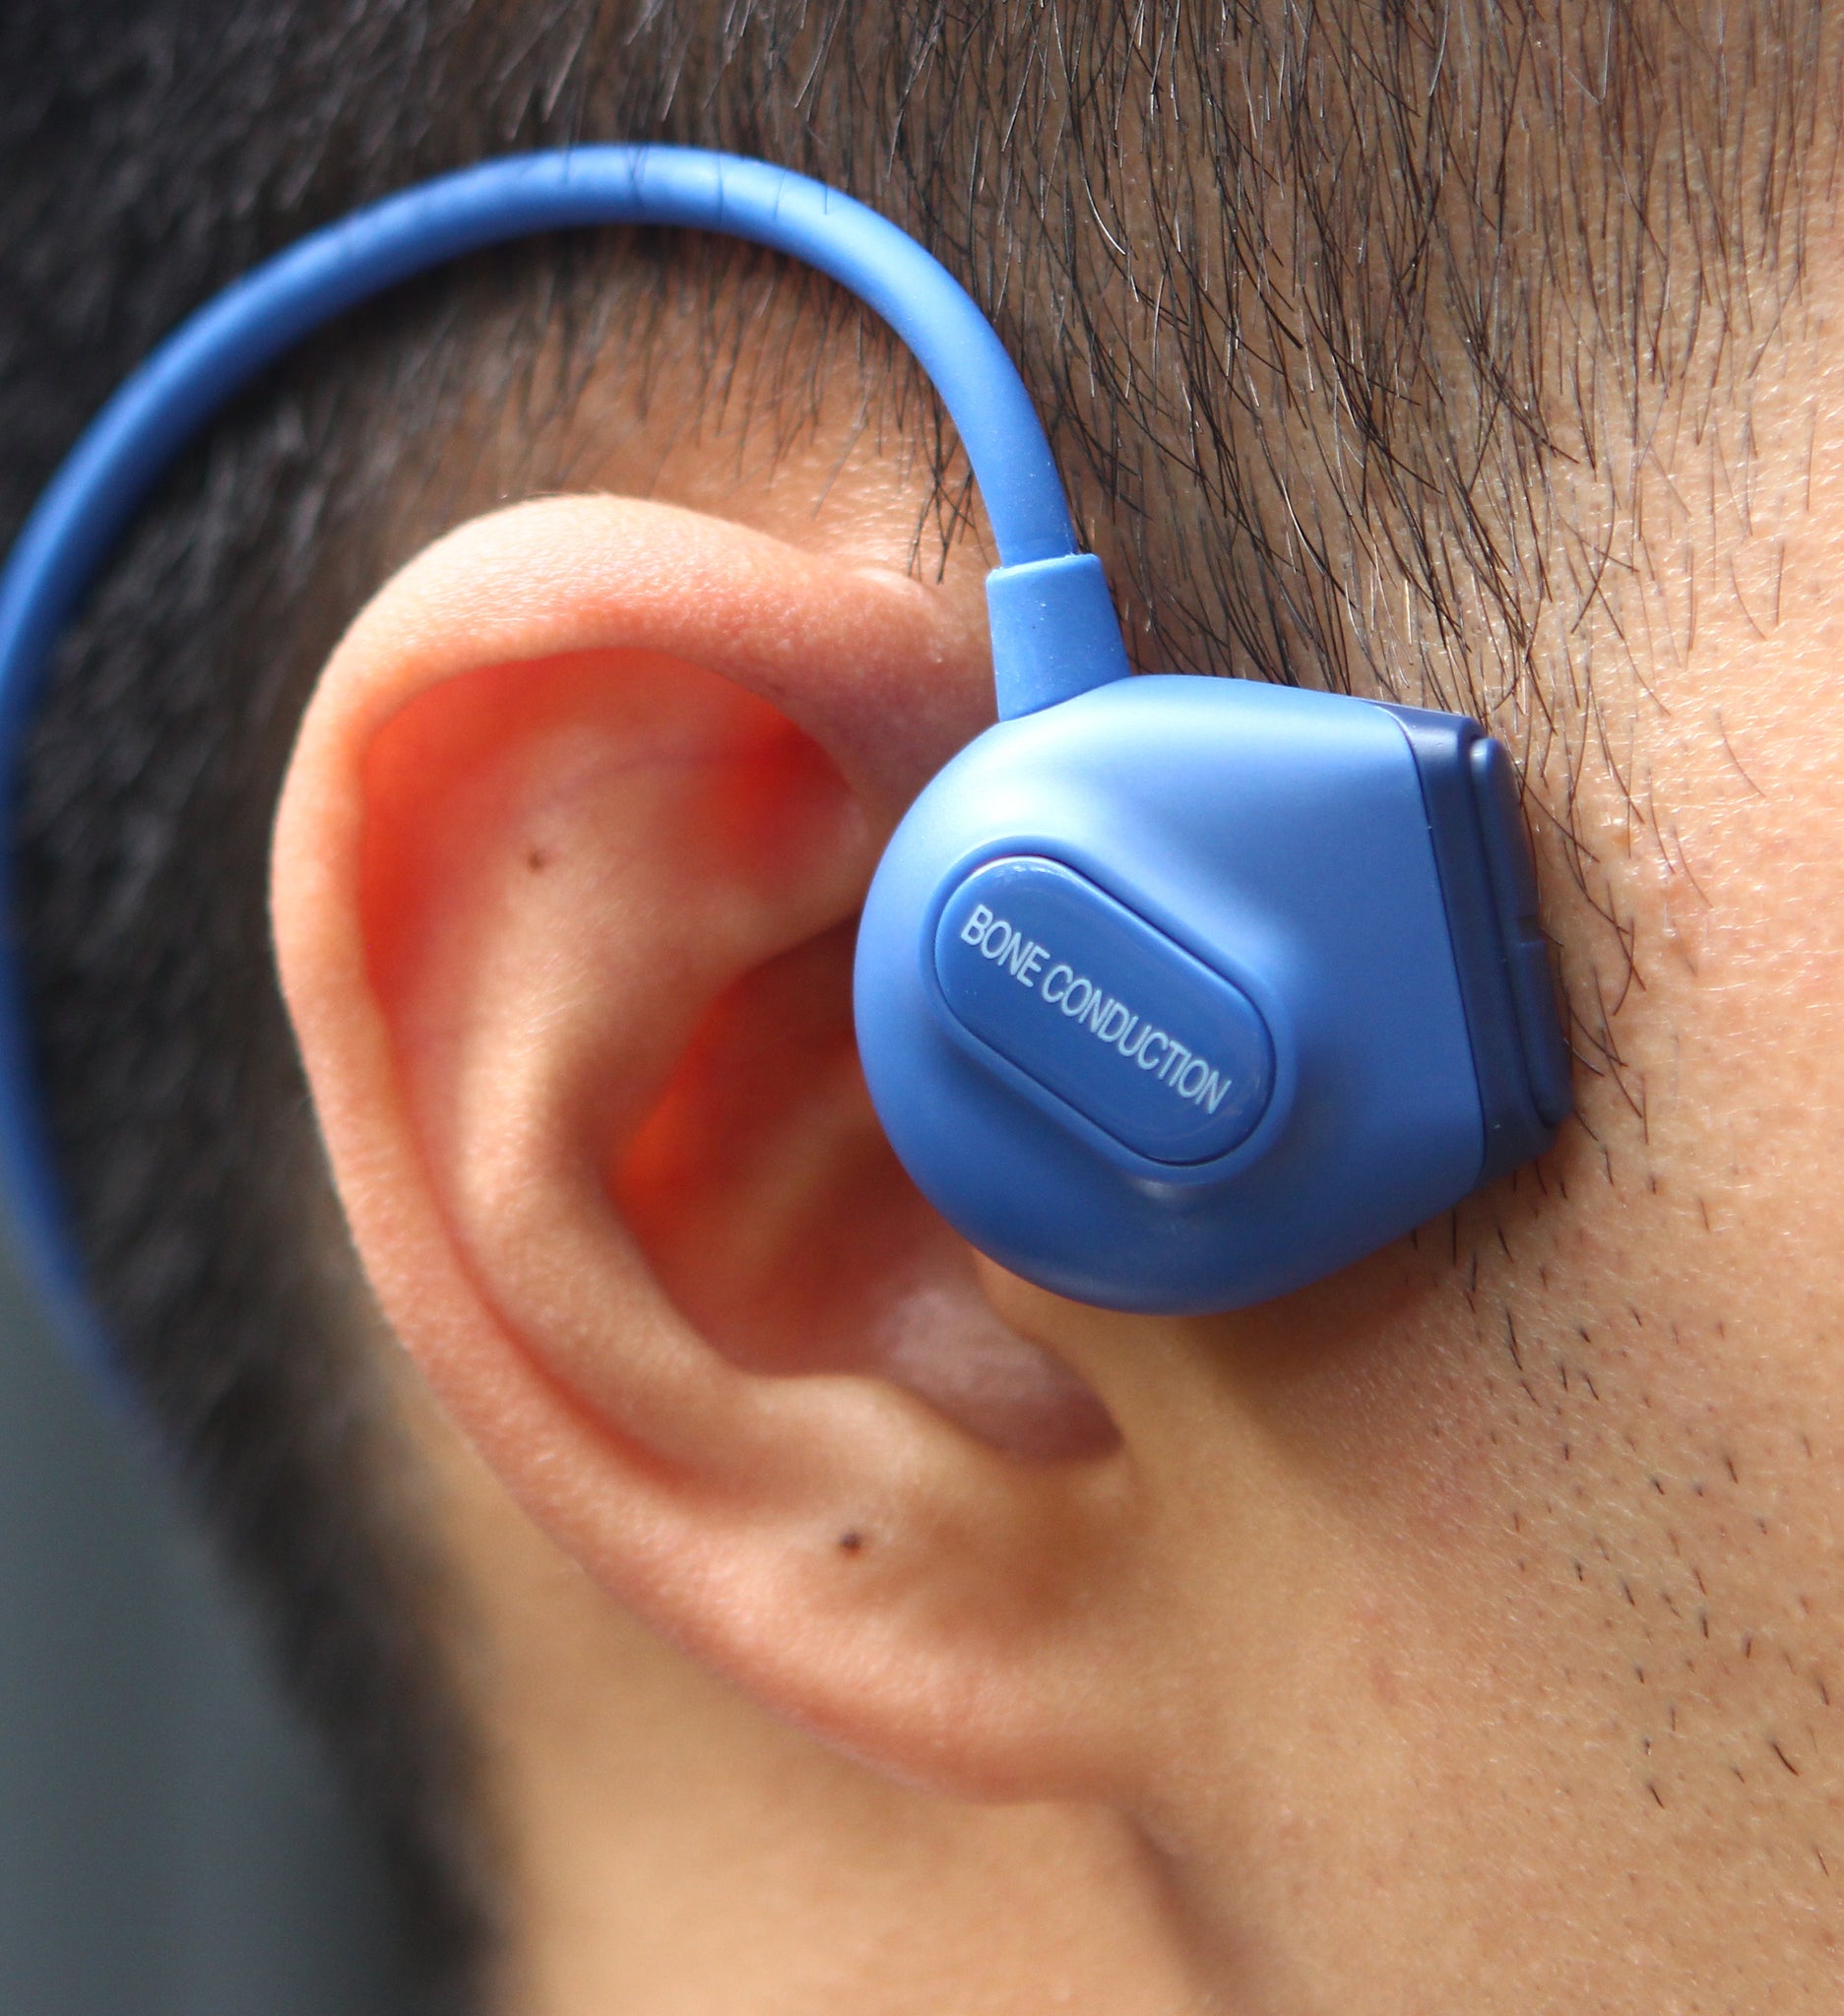 ULlife Me-300S: Lightest Foldable Bone Conduction Headphones